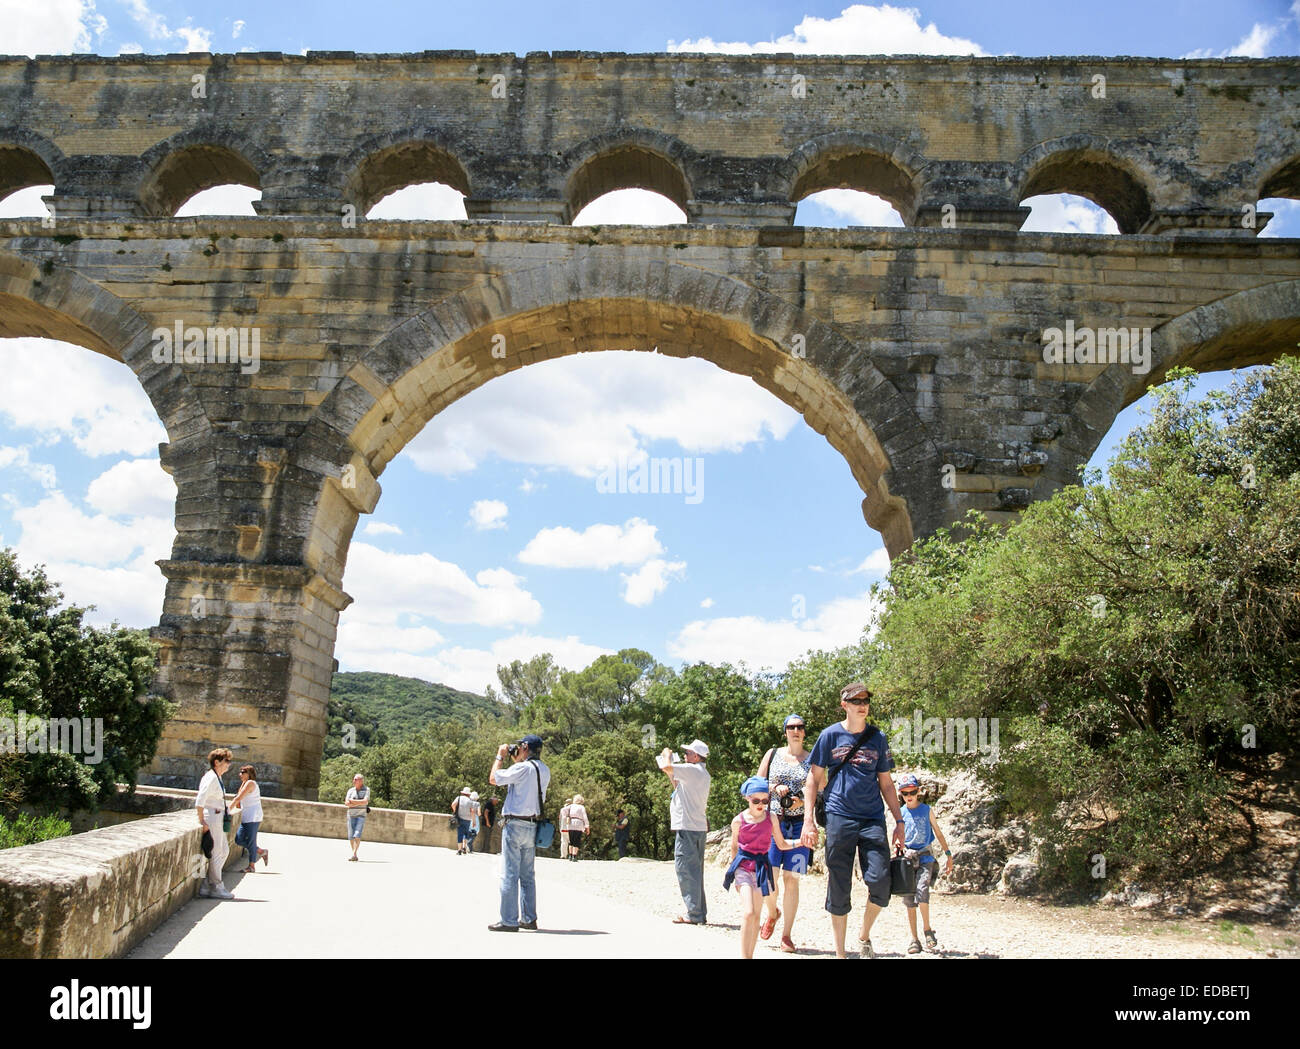 The Roman Aqueduct over the Gardon River, Pont du Gard, Provence, France Stock Photo